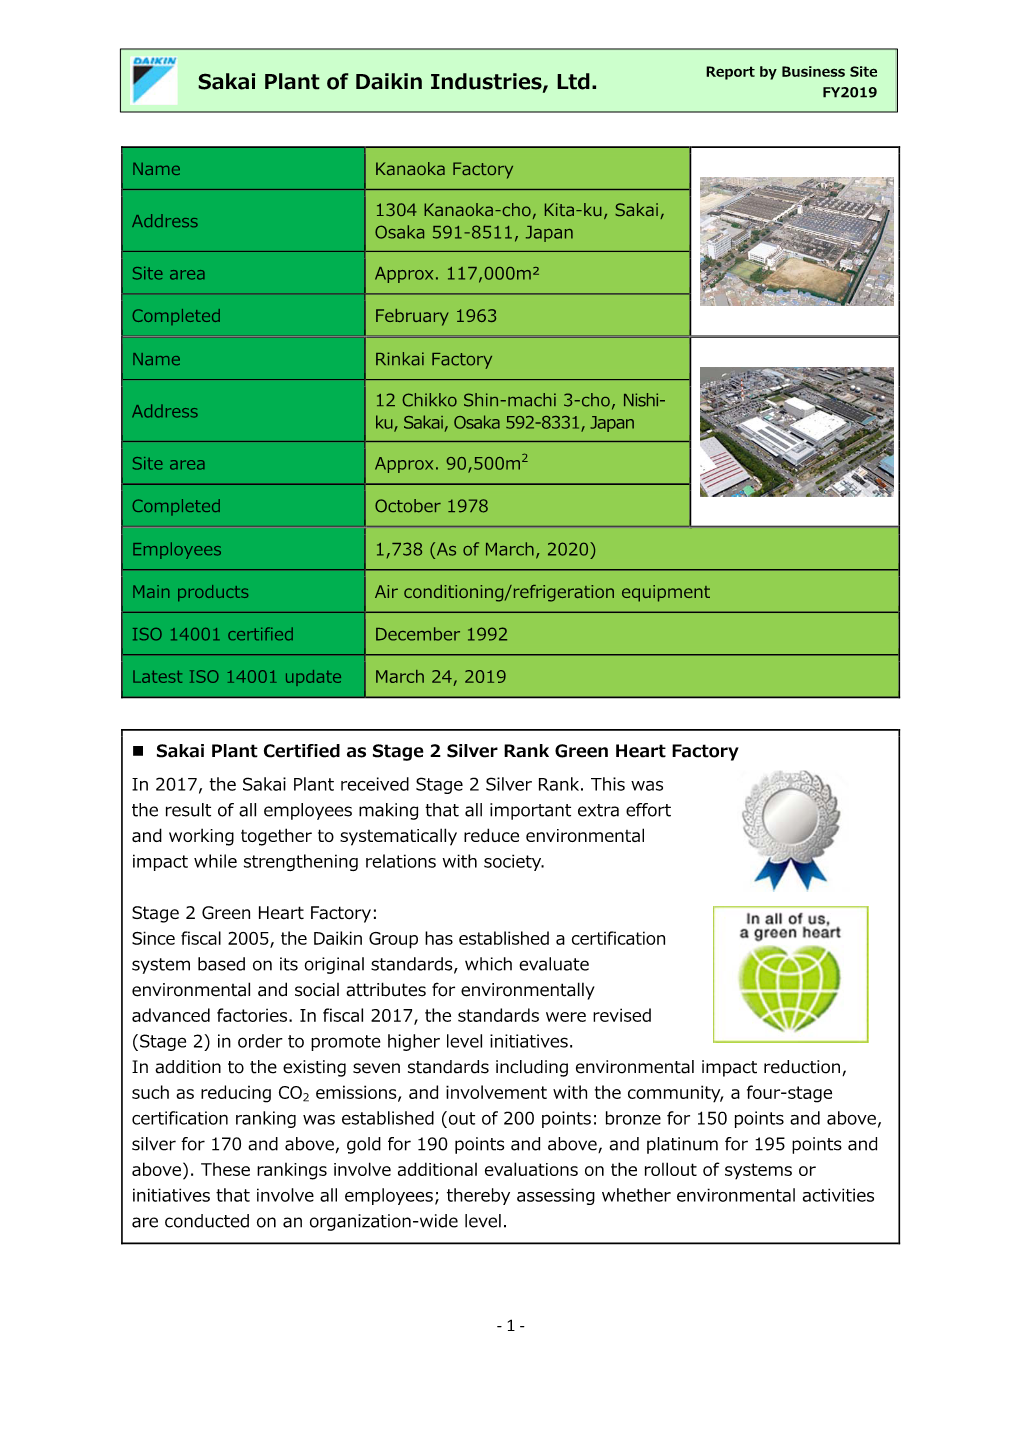 Sakai Plant of Daikin Industries, Ltd. Report by Business Site FY2019